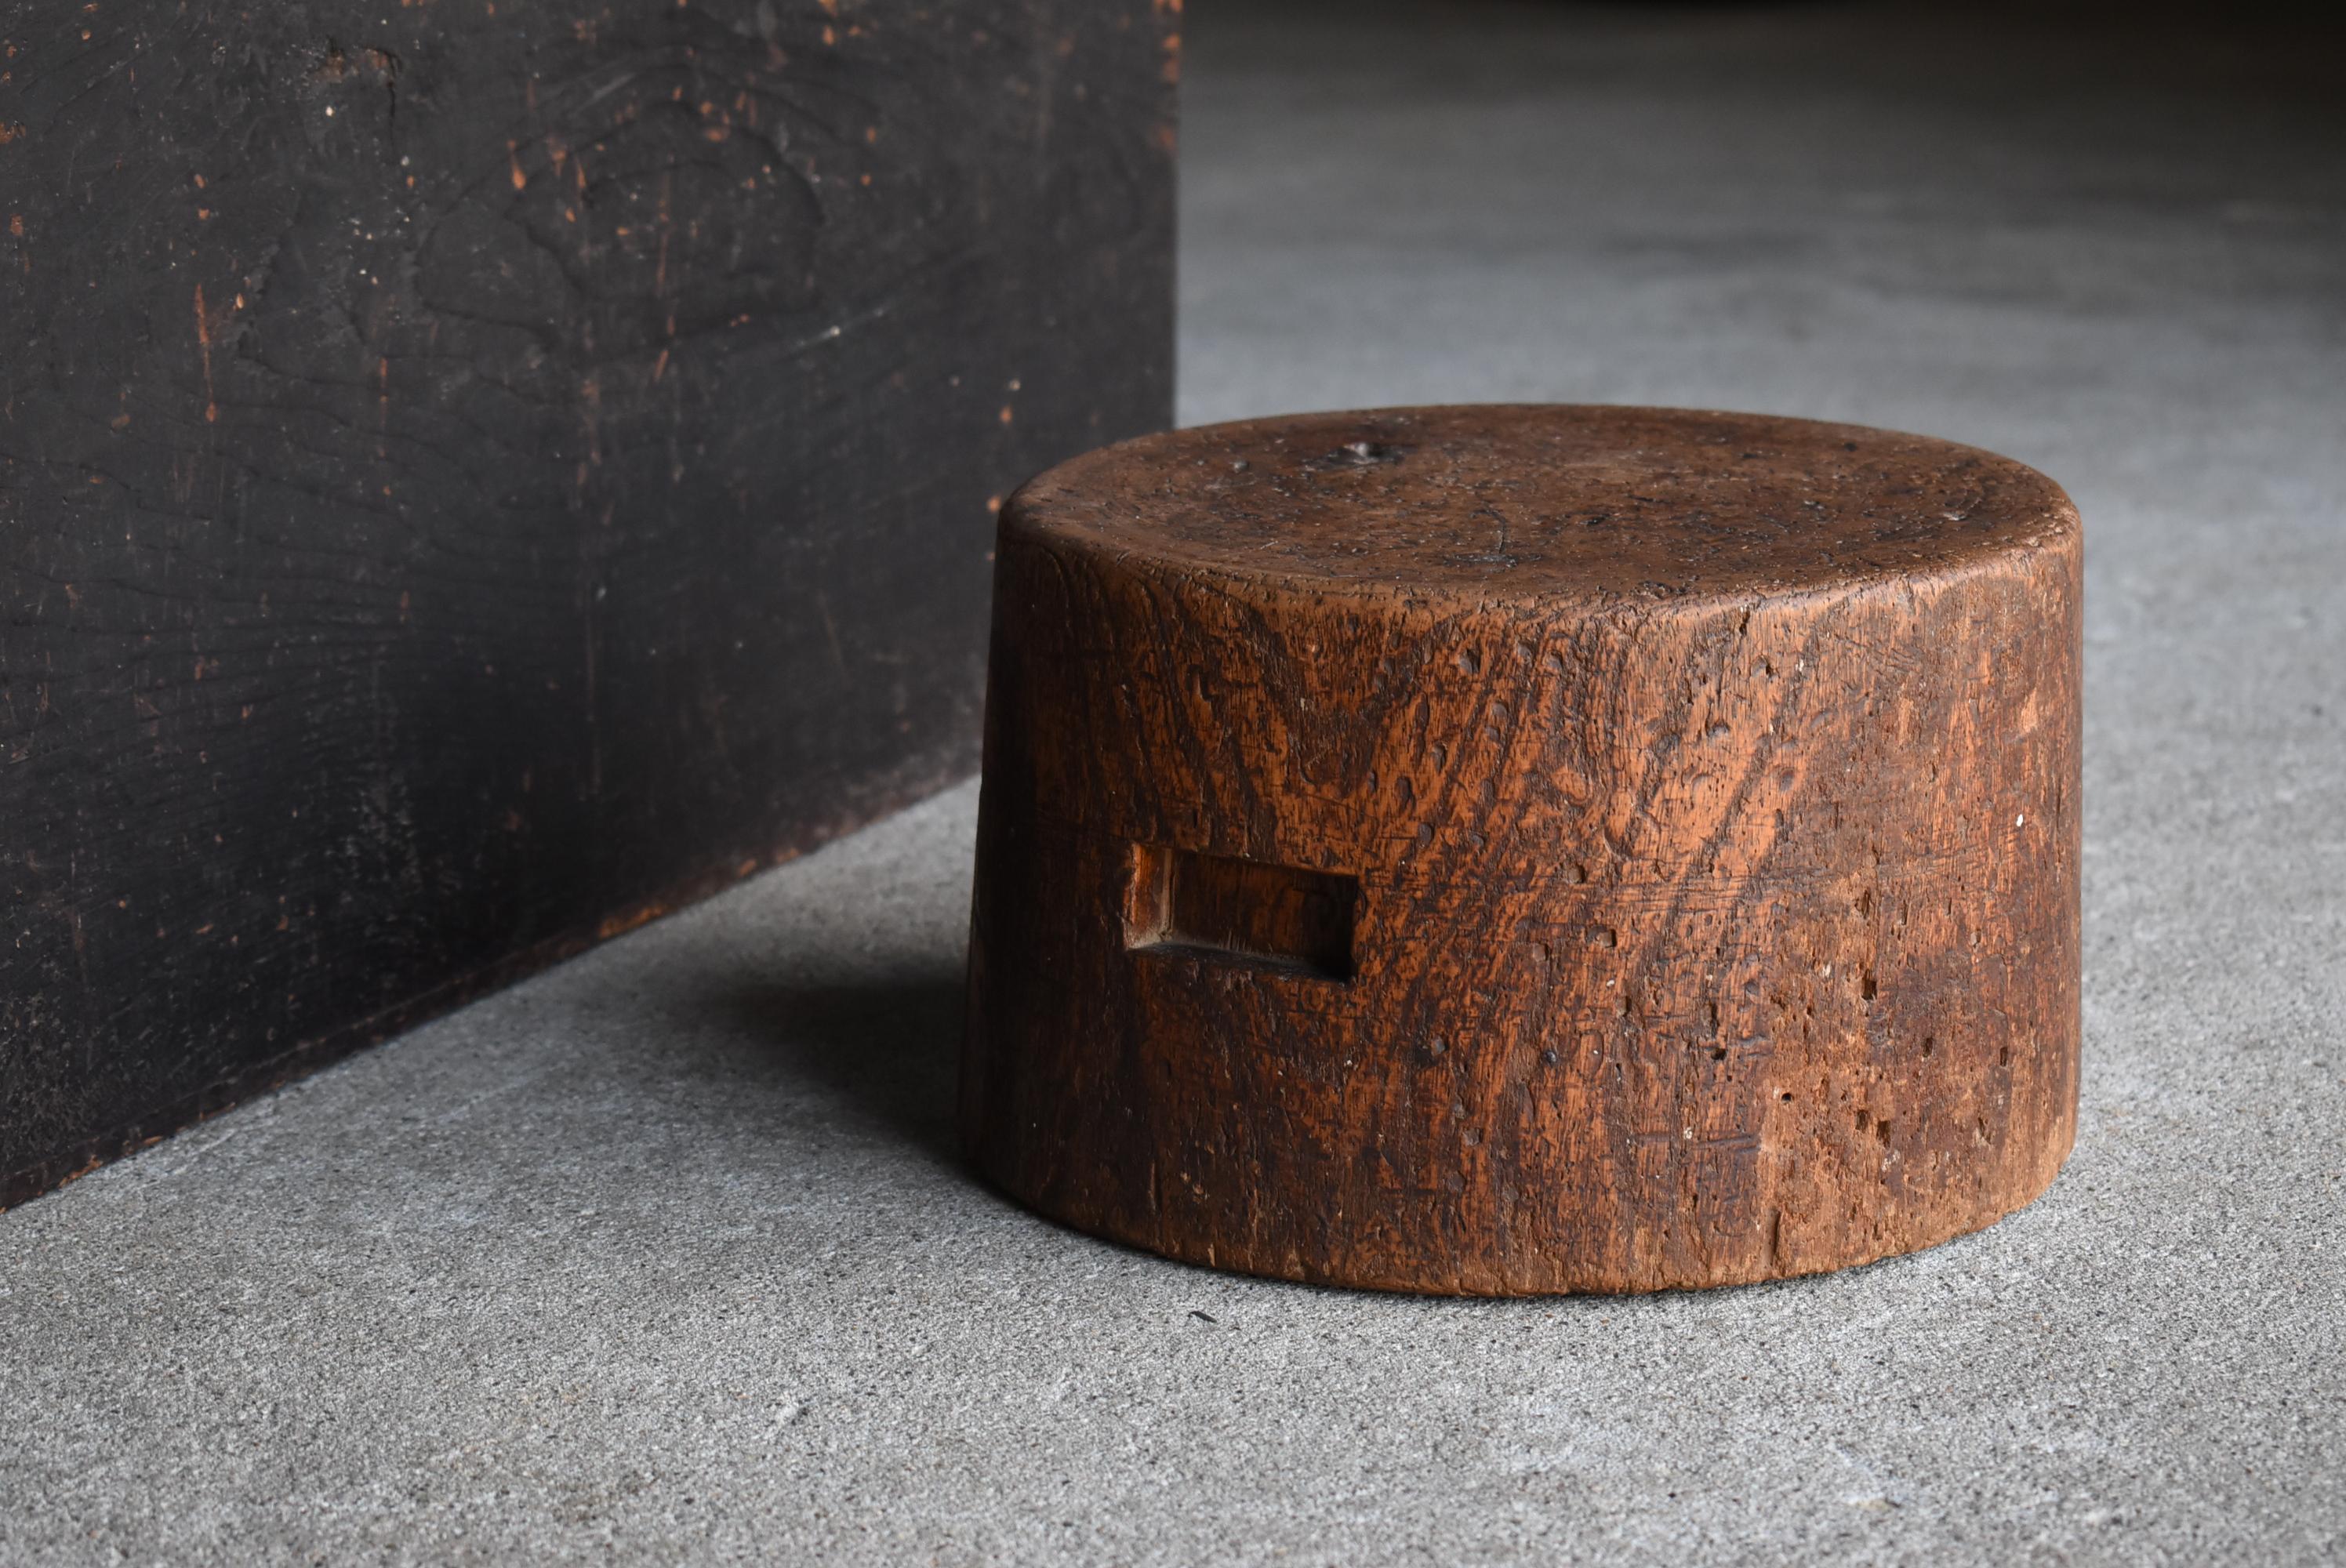 Meiji Japanese Antique Wooden Block Stool 1860s-1900s / Wabi Sabi Wood Chair Primitive